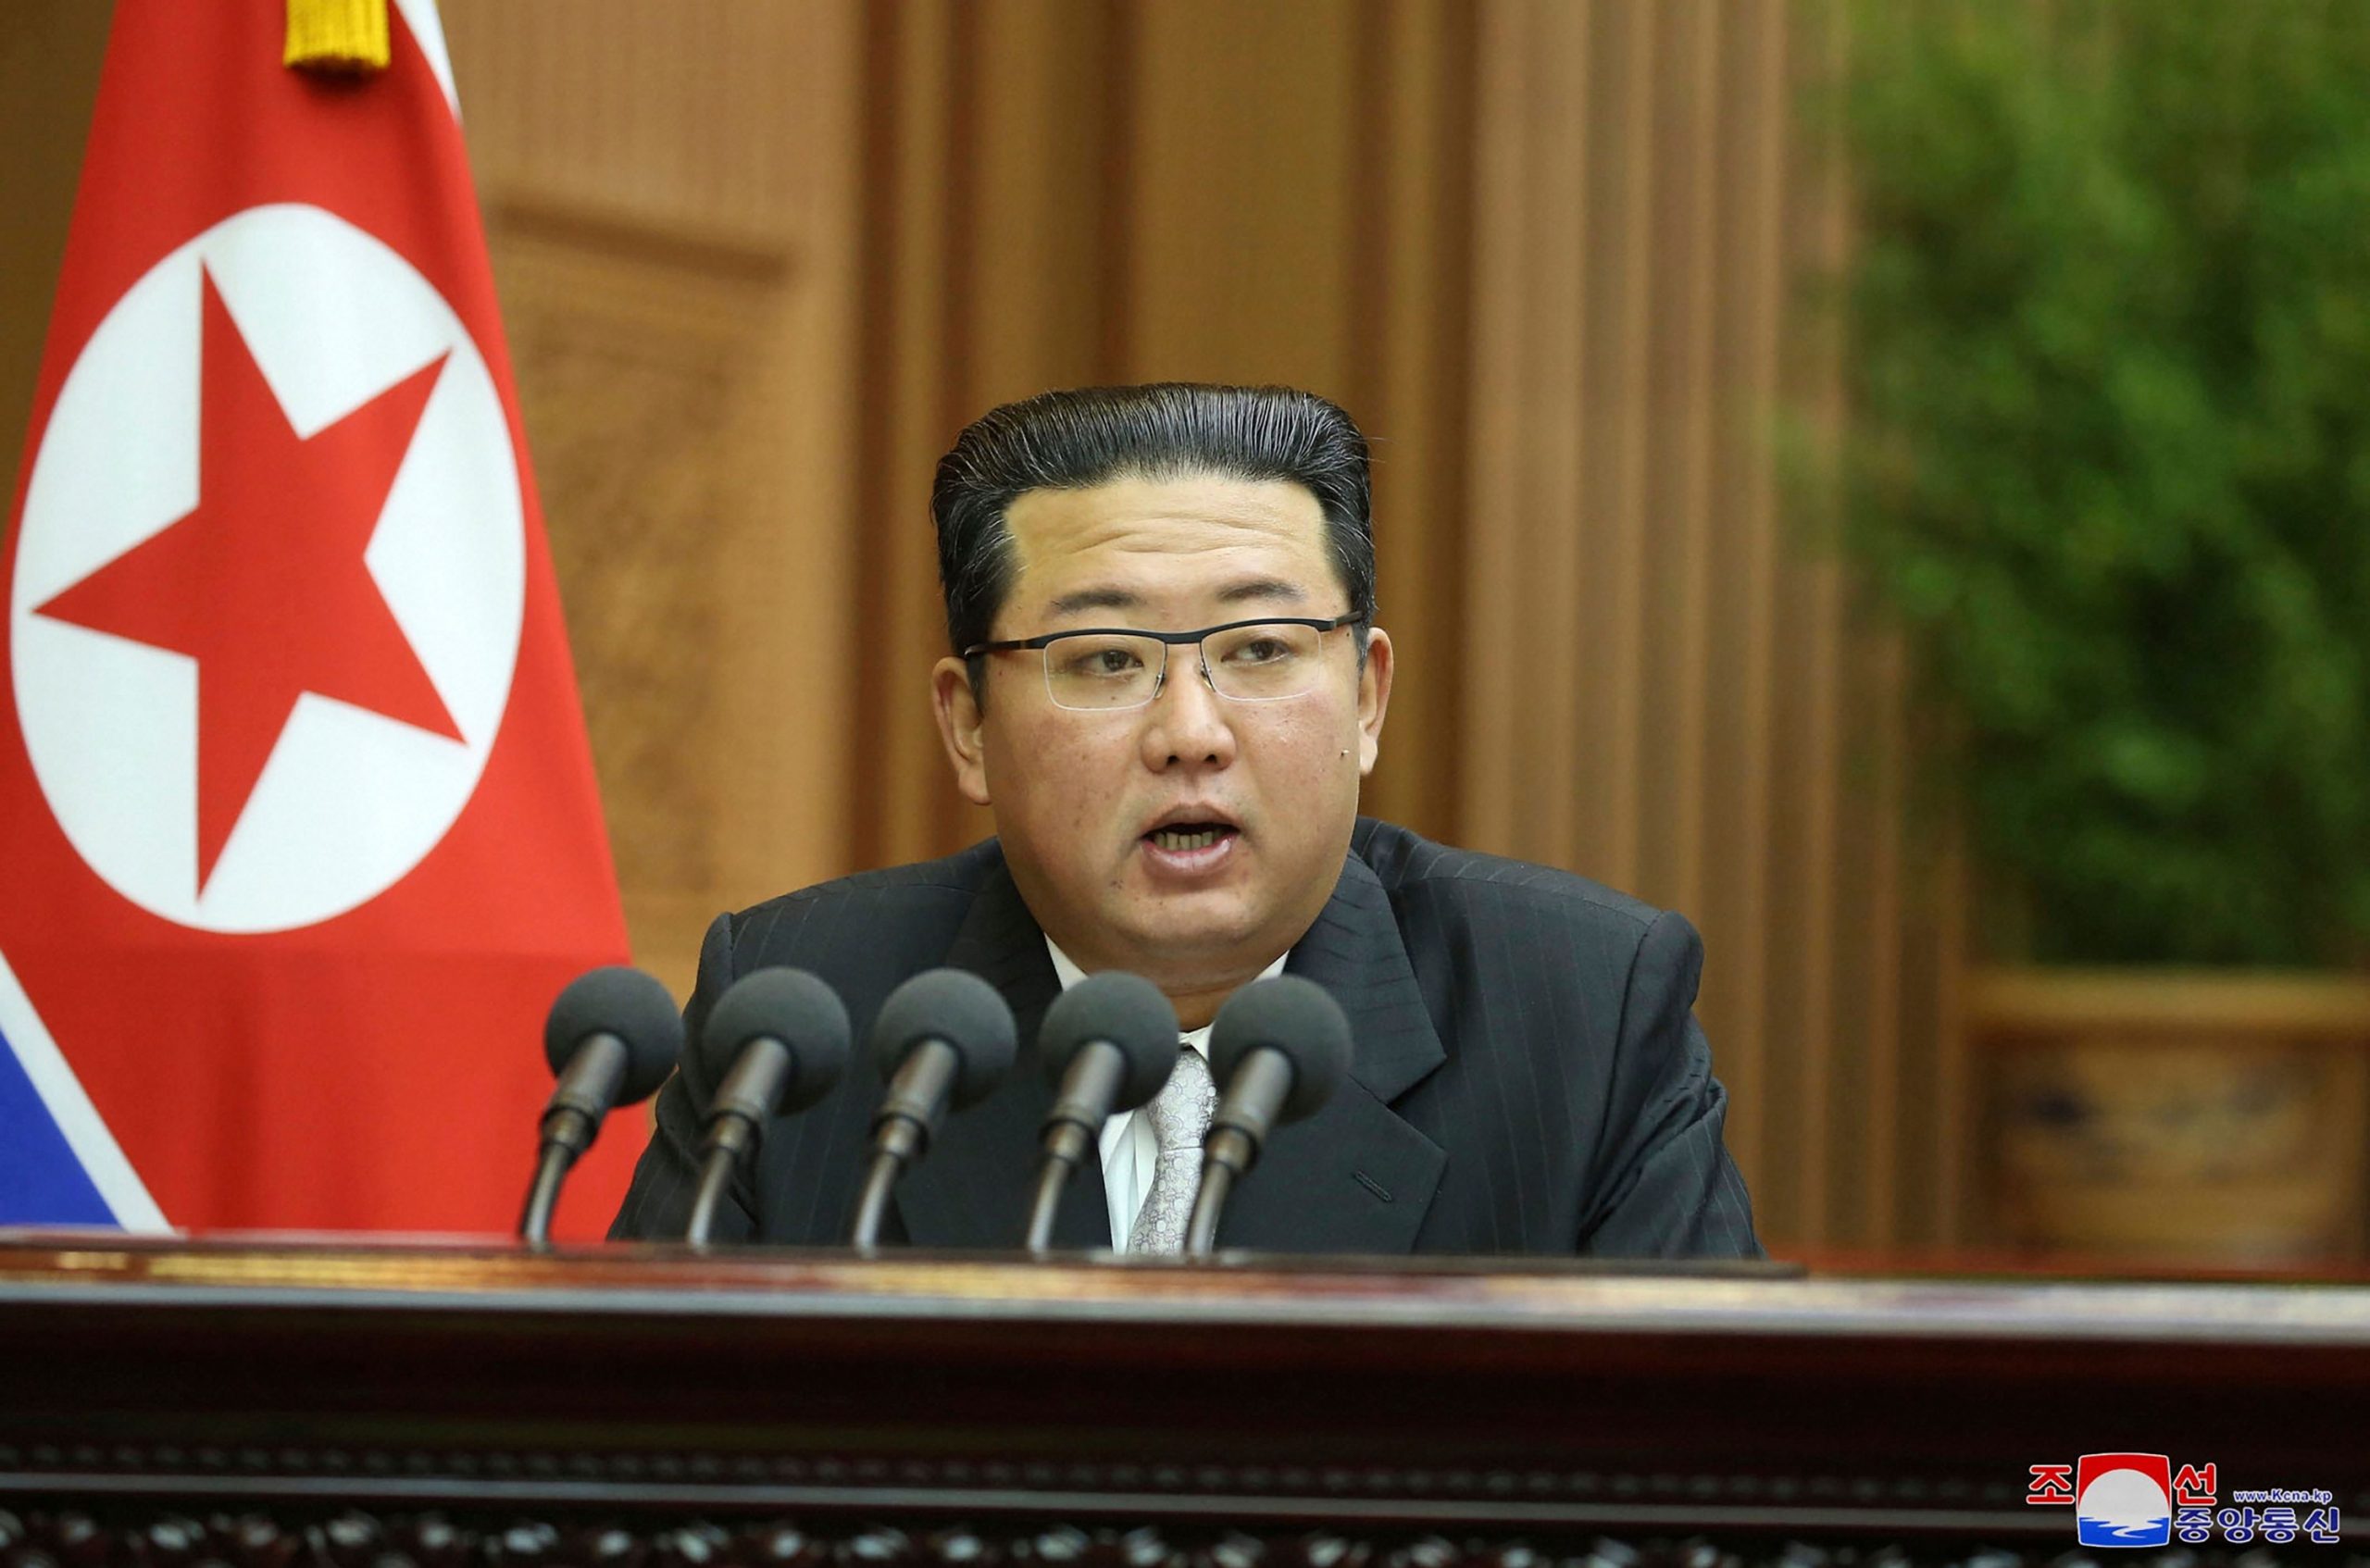 North Koreas Kim makes rare public appearance to visit socialist utopia